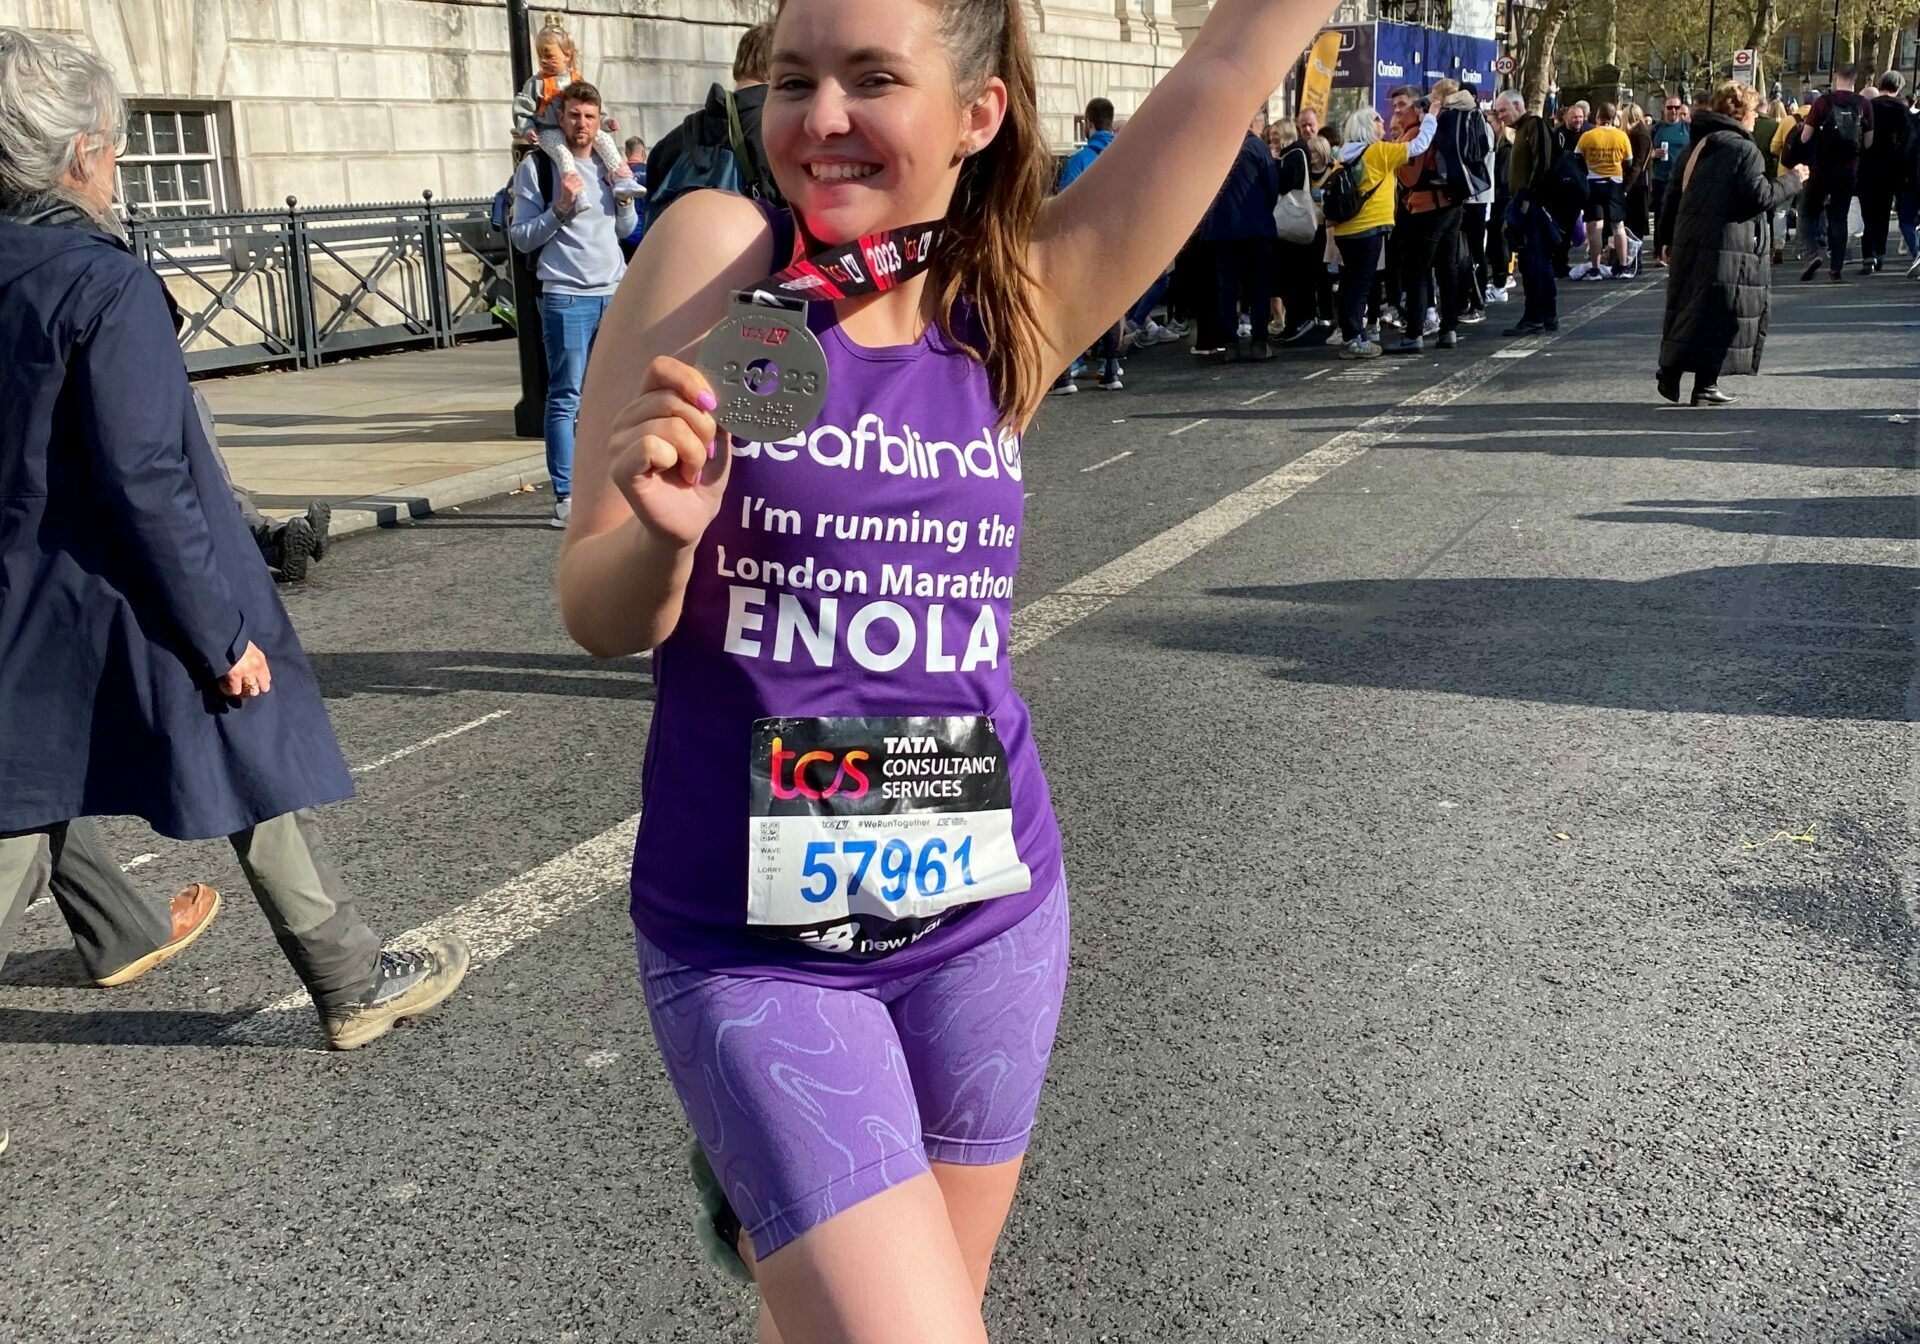 Enola at the London Marathon